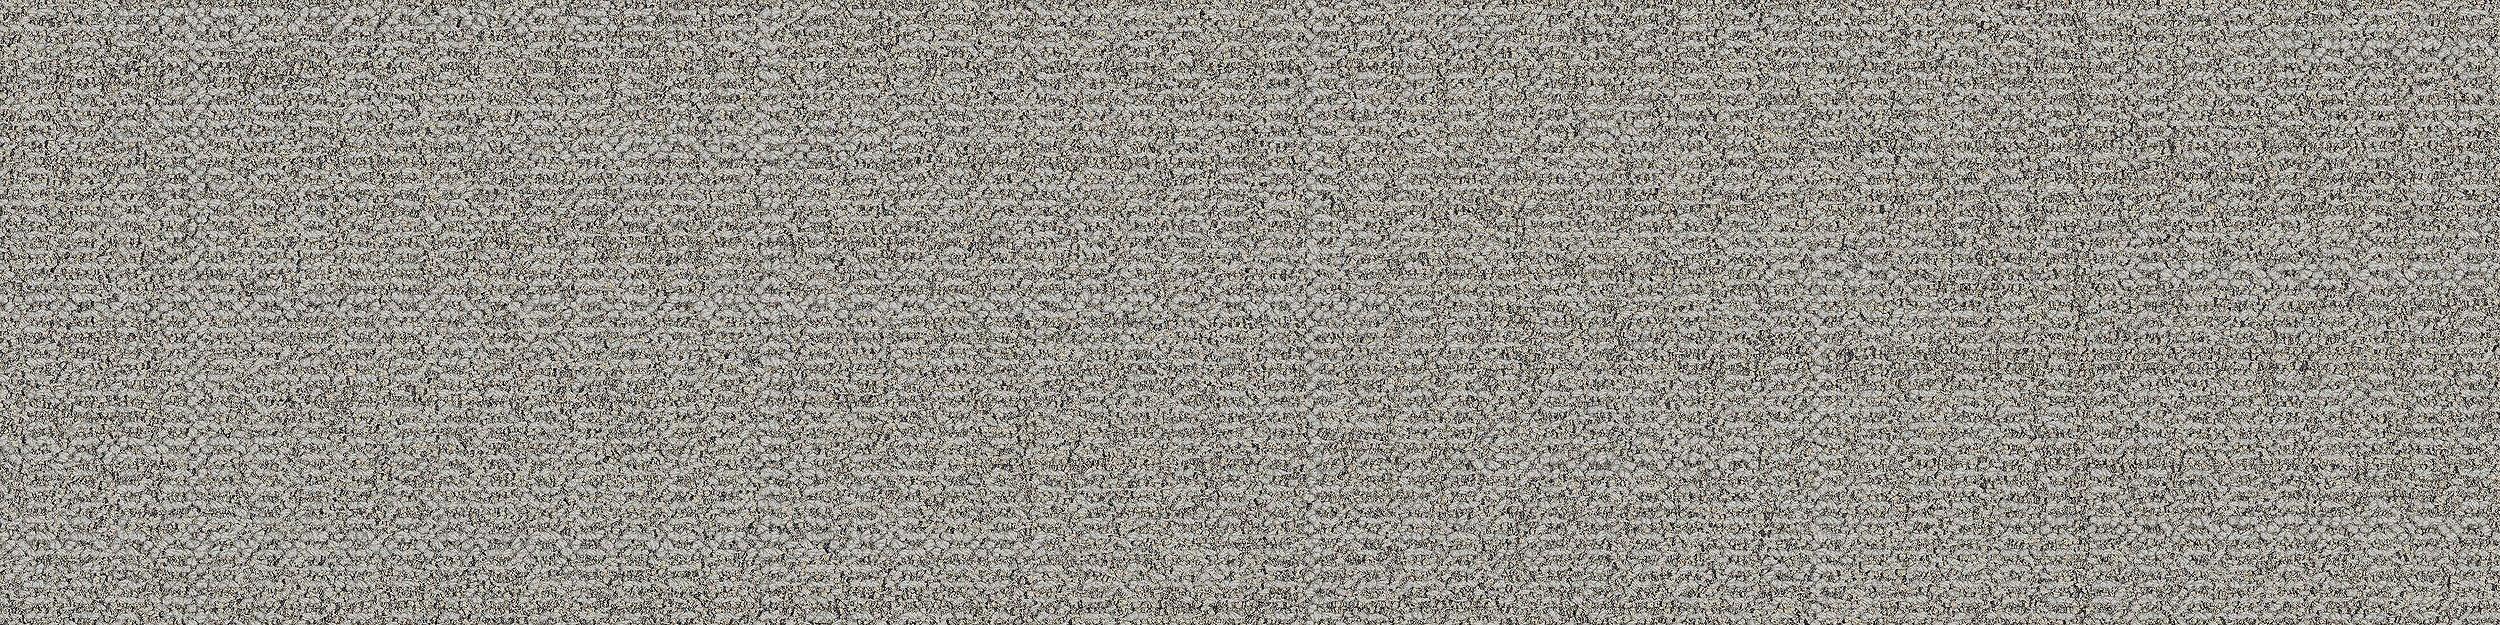 Open Air 401 Carpet Tile In Linen image number 7